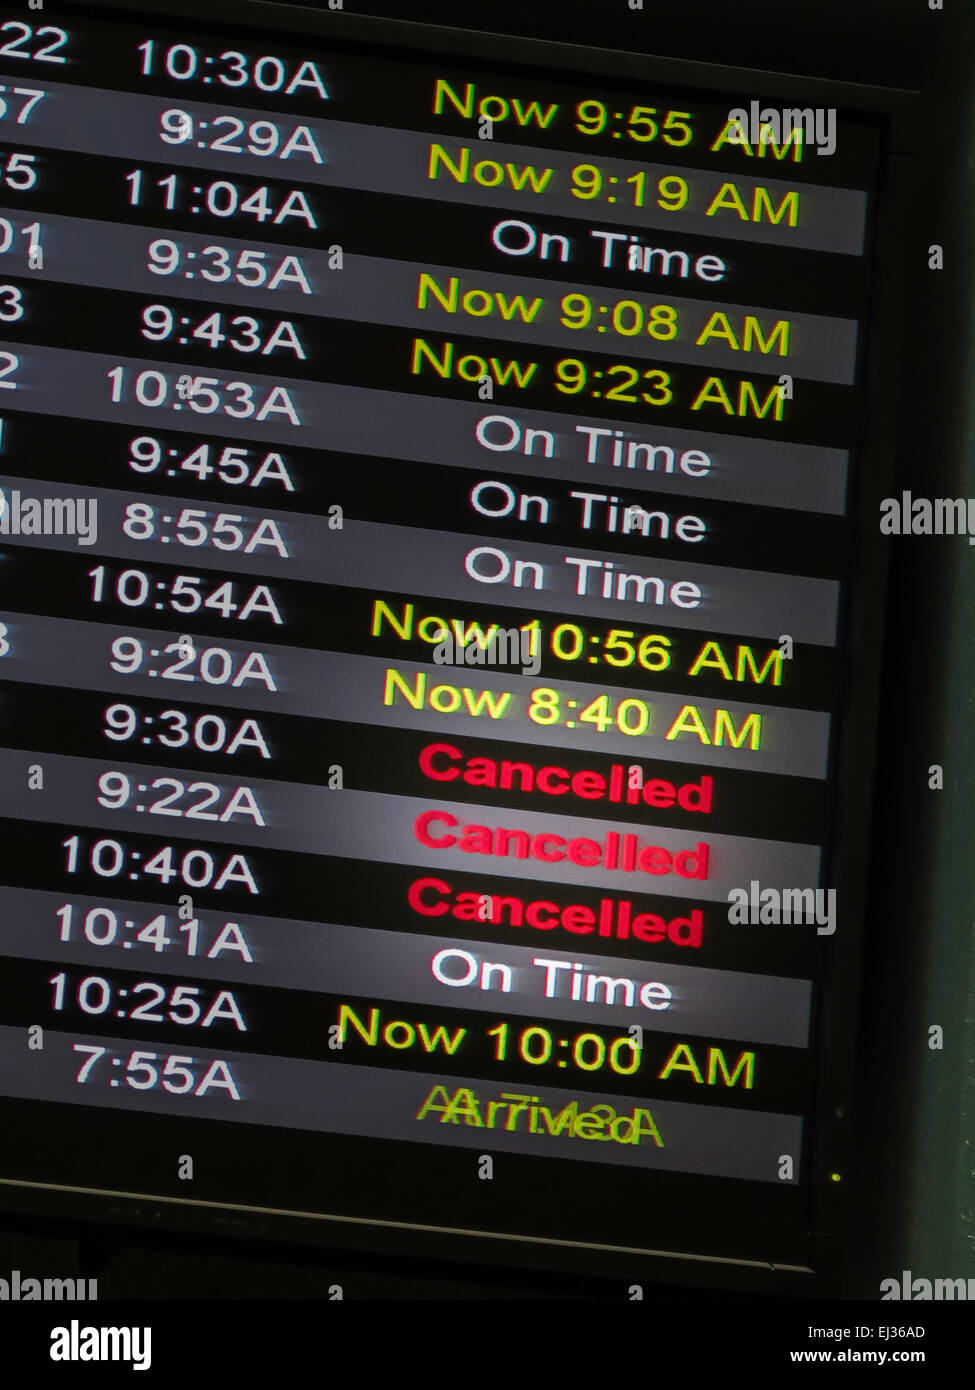 Airport Flight Arrival/Departure Board, USA Stock Photo